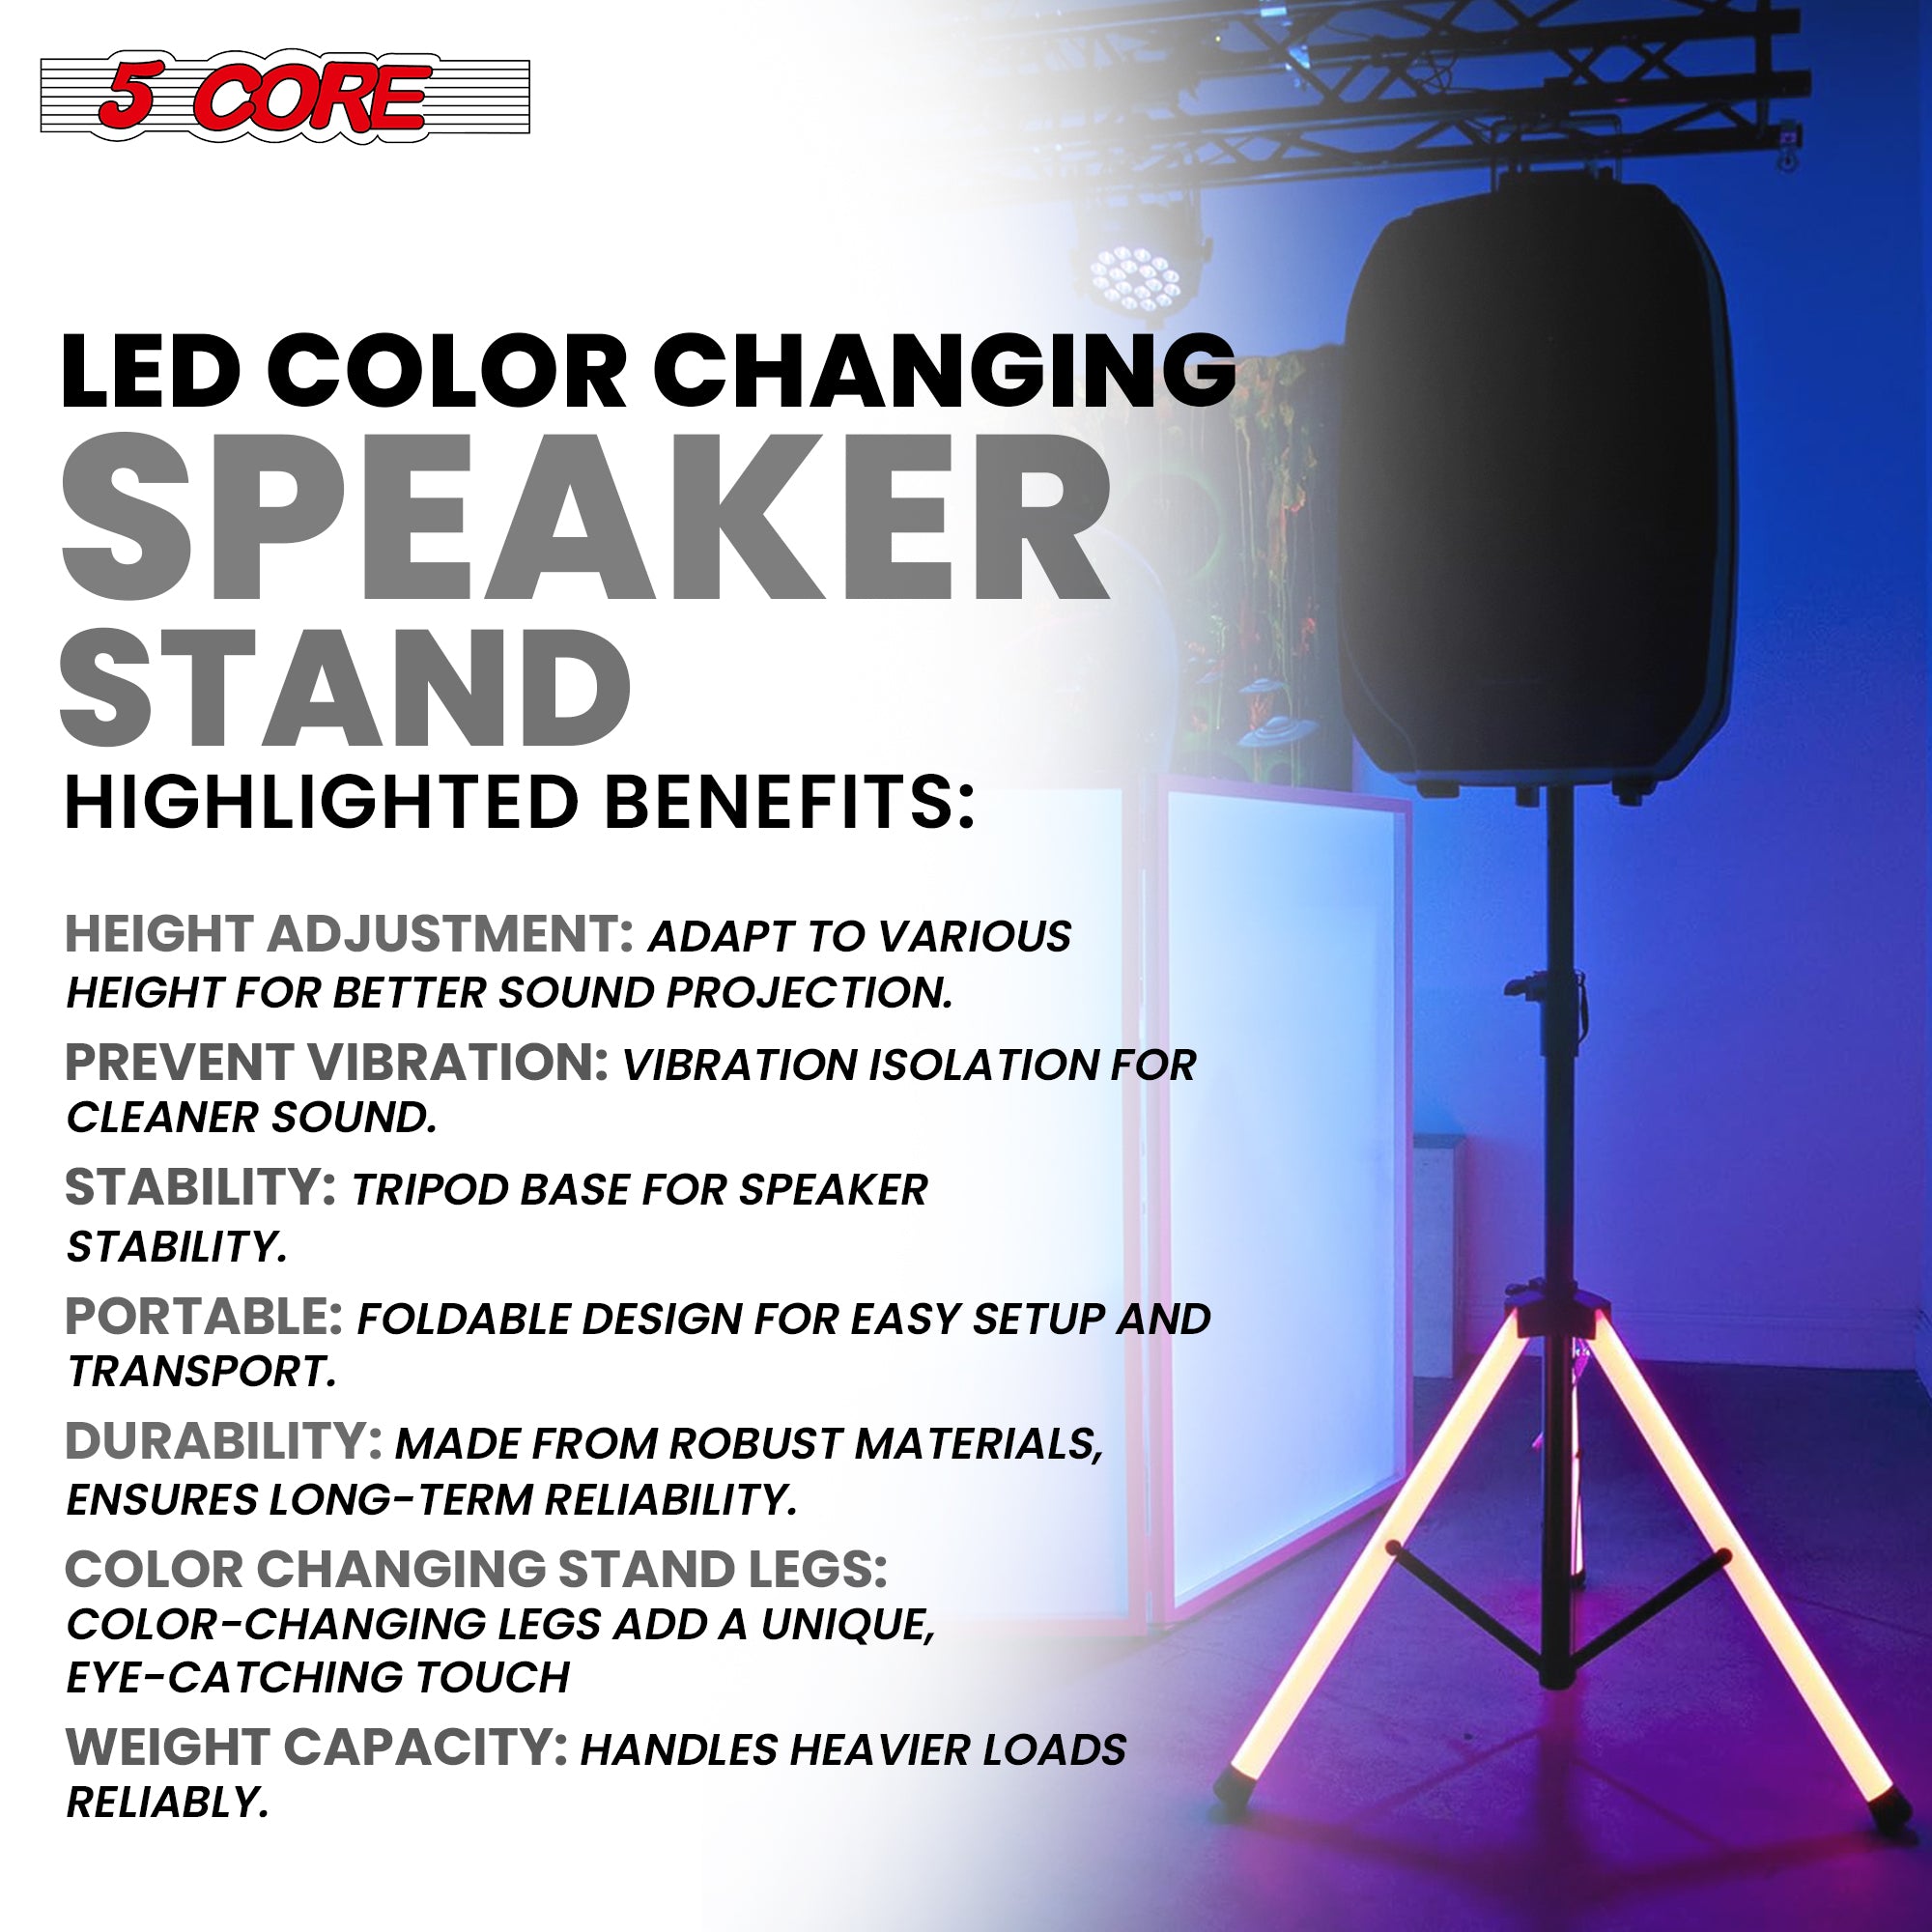 Led color changing speaker stand